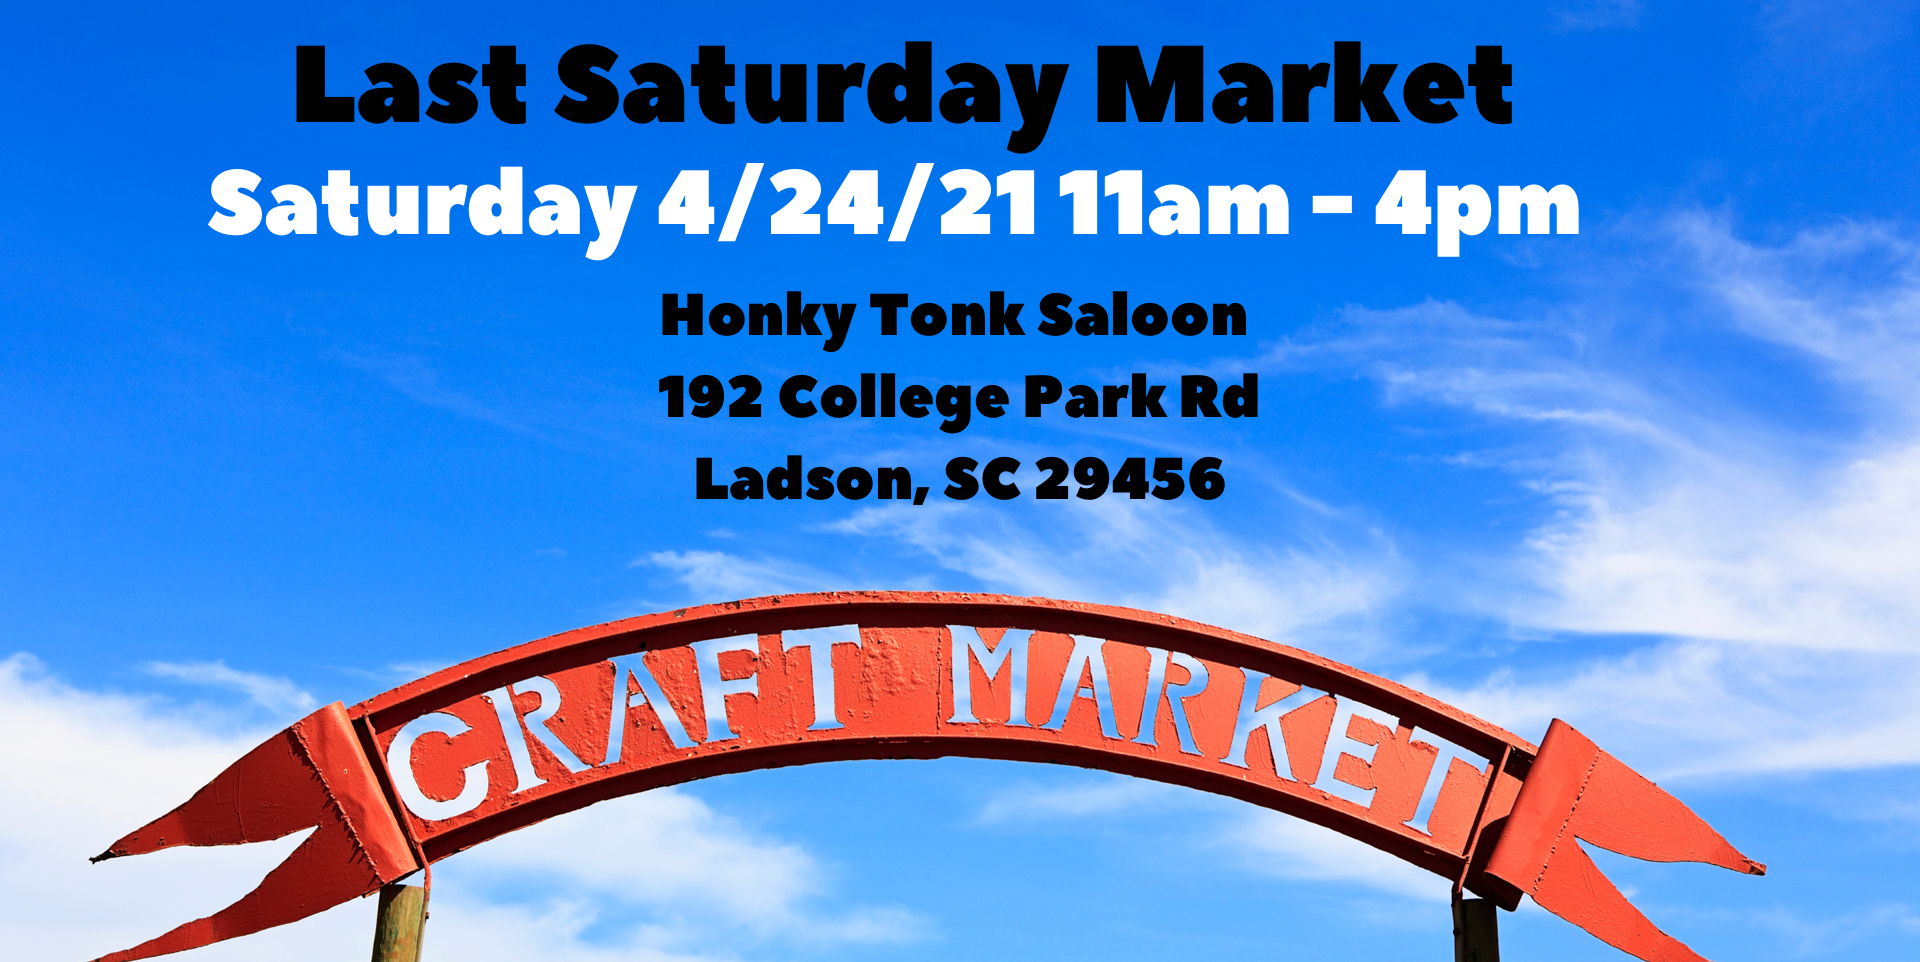 Last Saturday Vendors Market promotional image